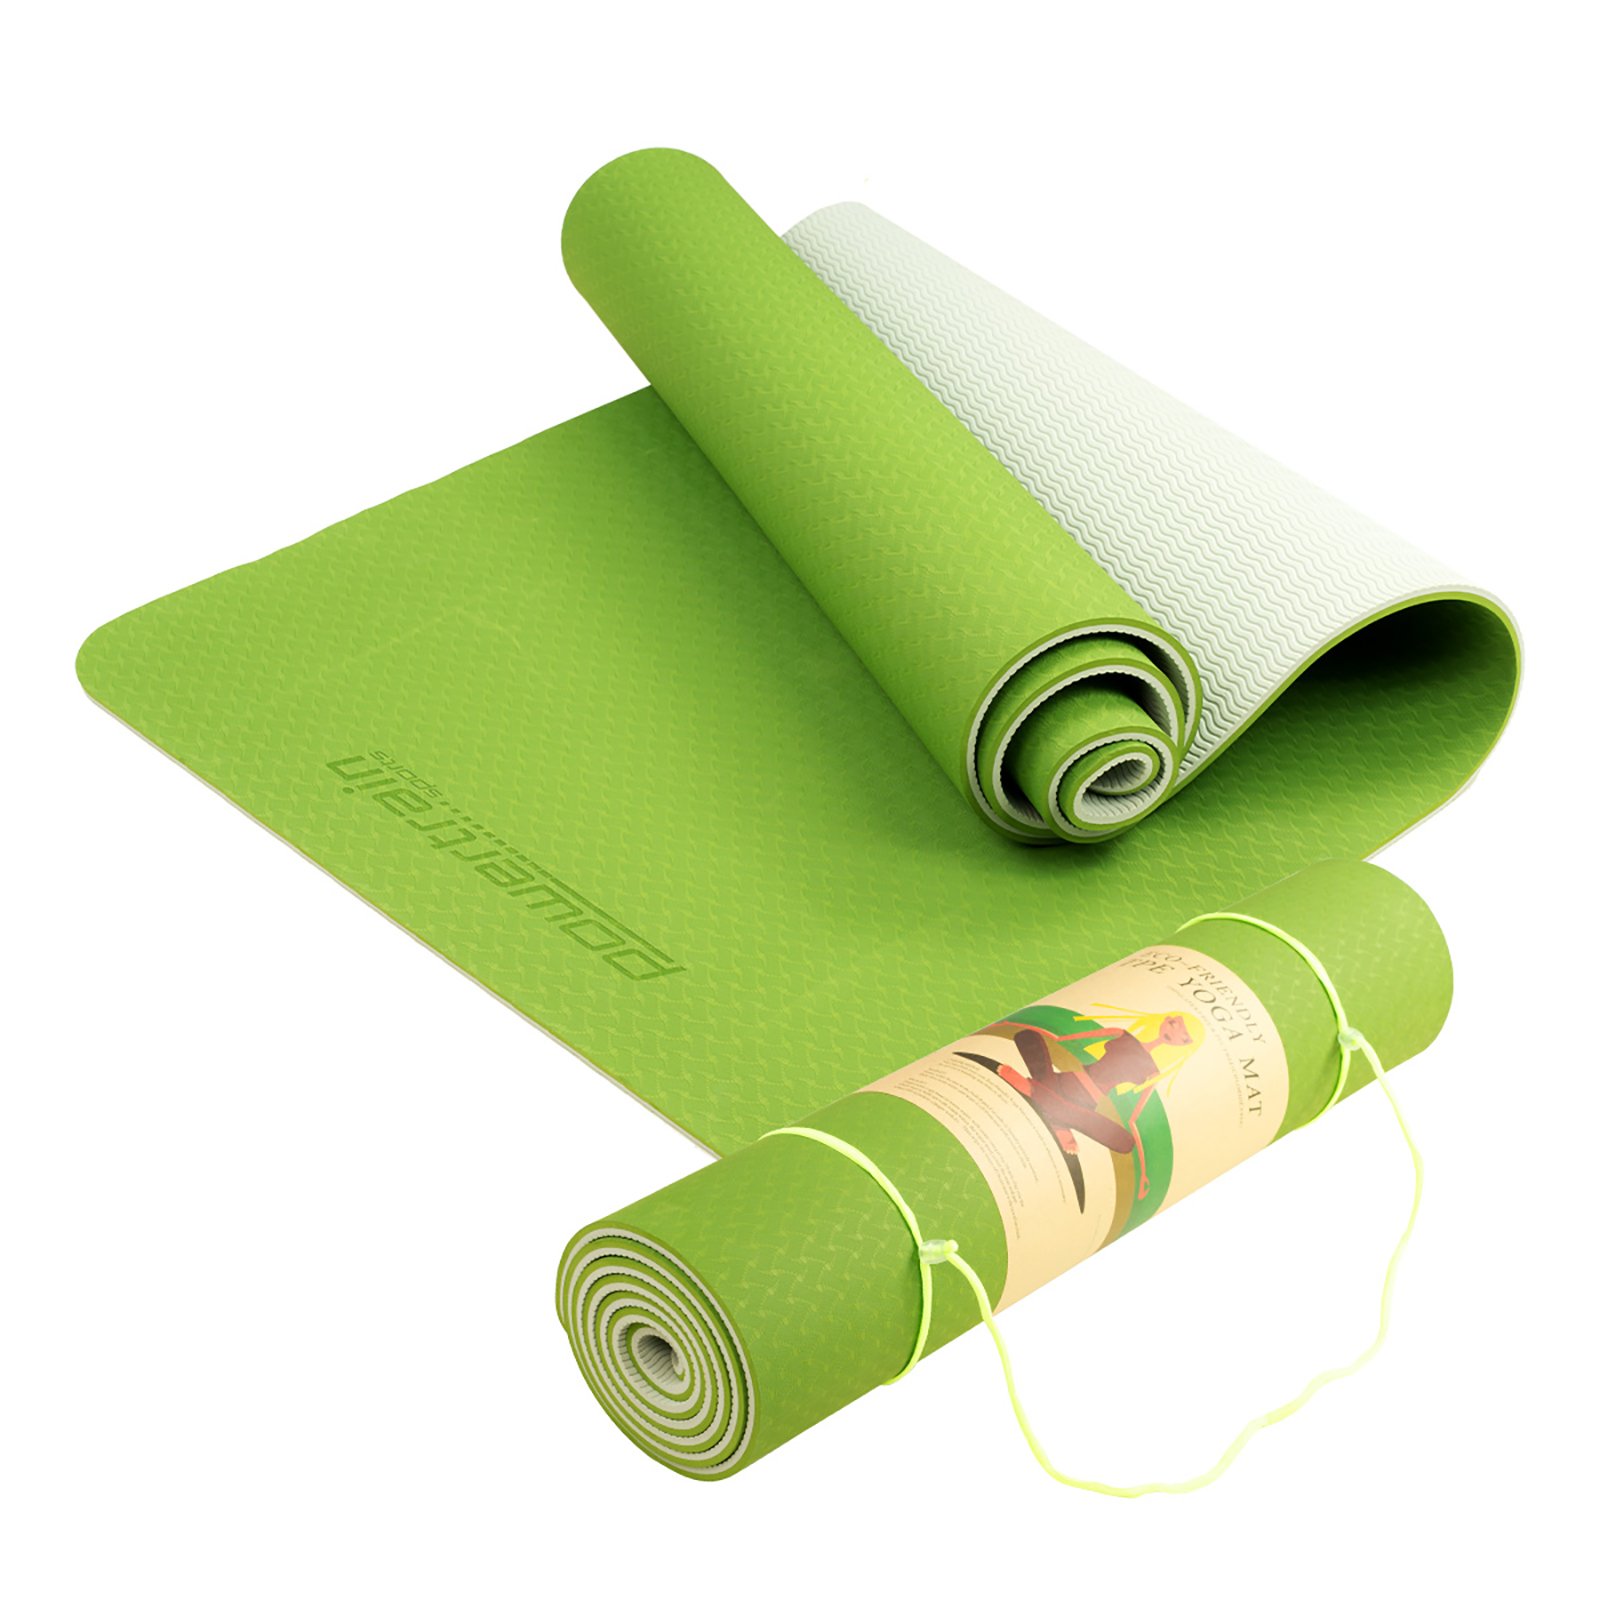 Powertrain Eco-Friendly TPE Pilates Exercise Yoga Mat 8mm - Green 2